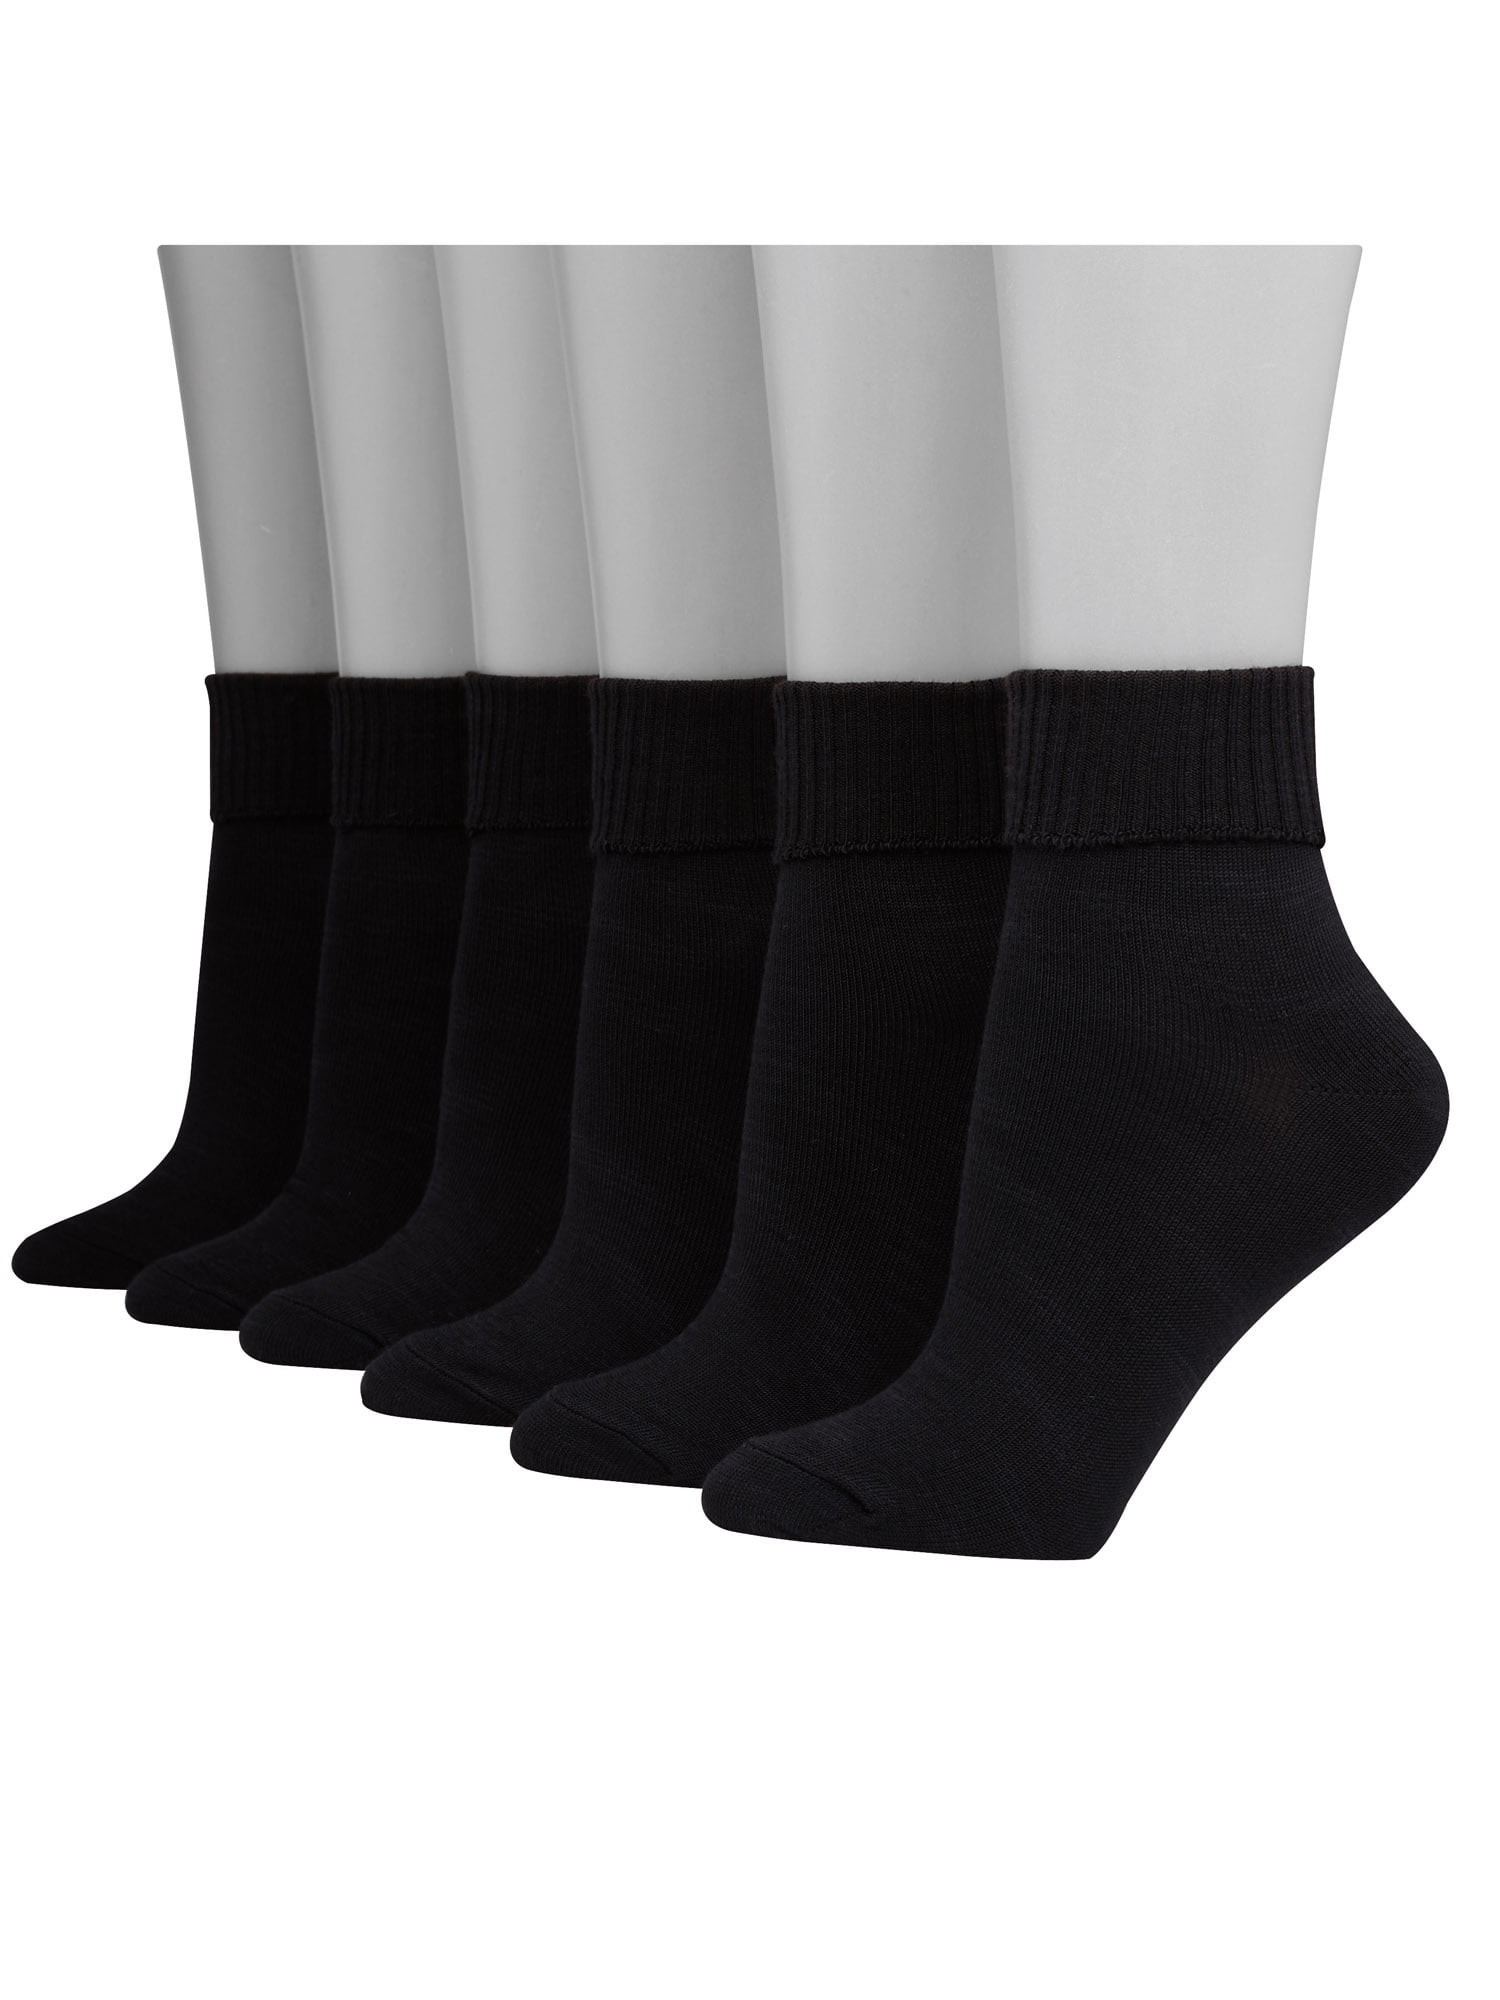 Women's ComfortSoft Cuff Socks, 6 Pack - Walmart.com